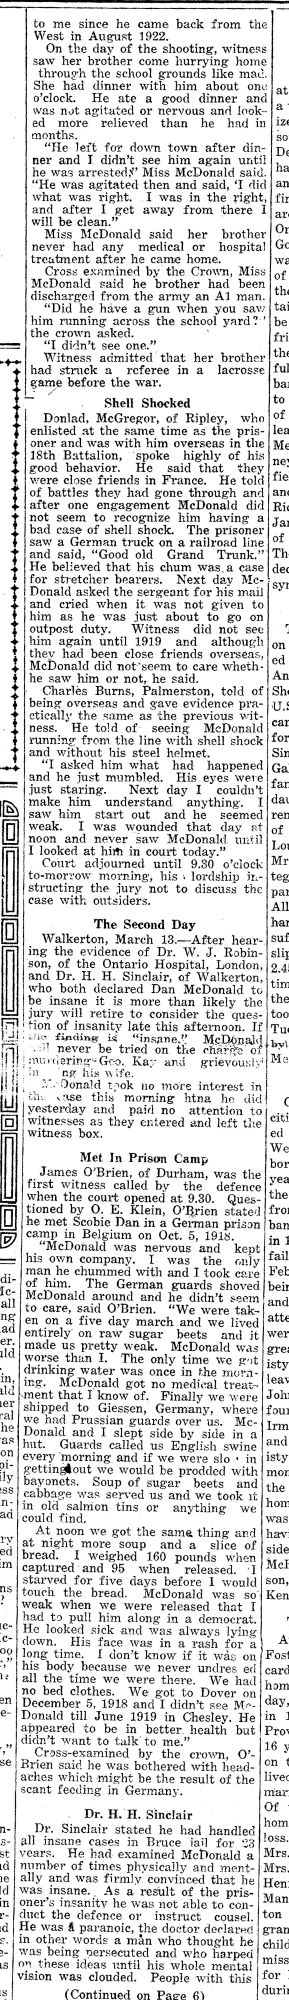 Kincardine Reporter, March 15, 1923